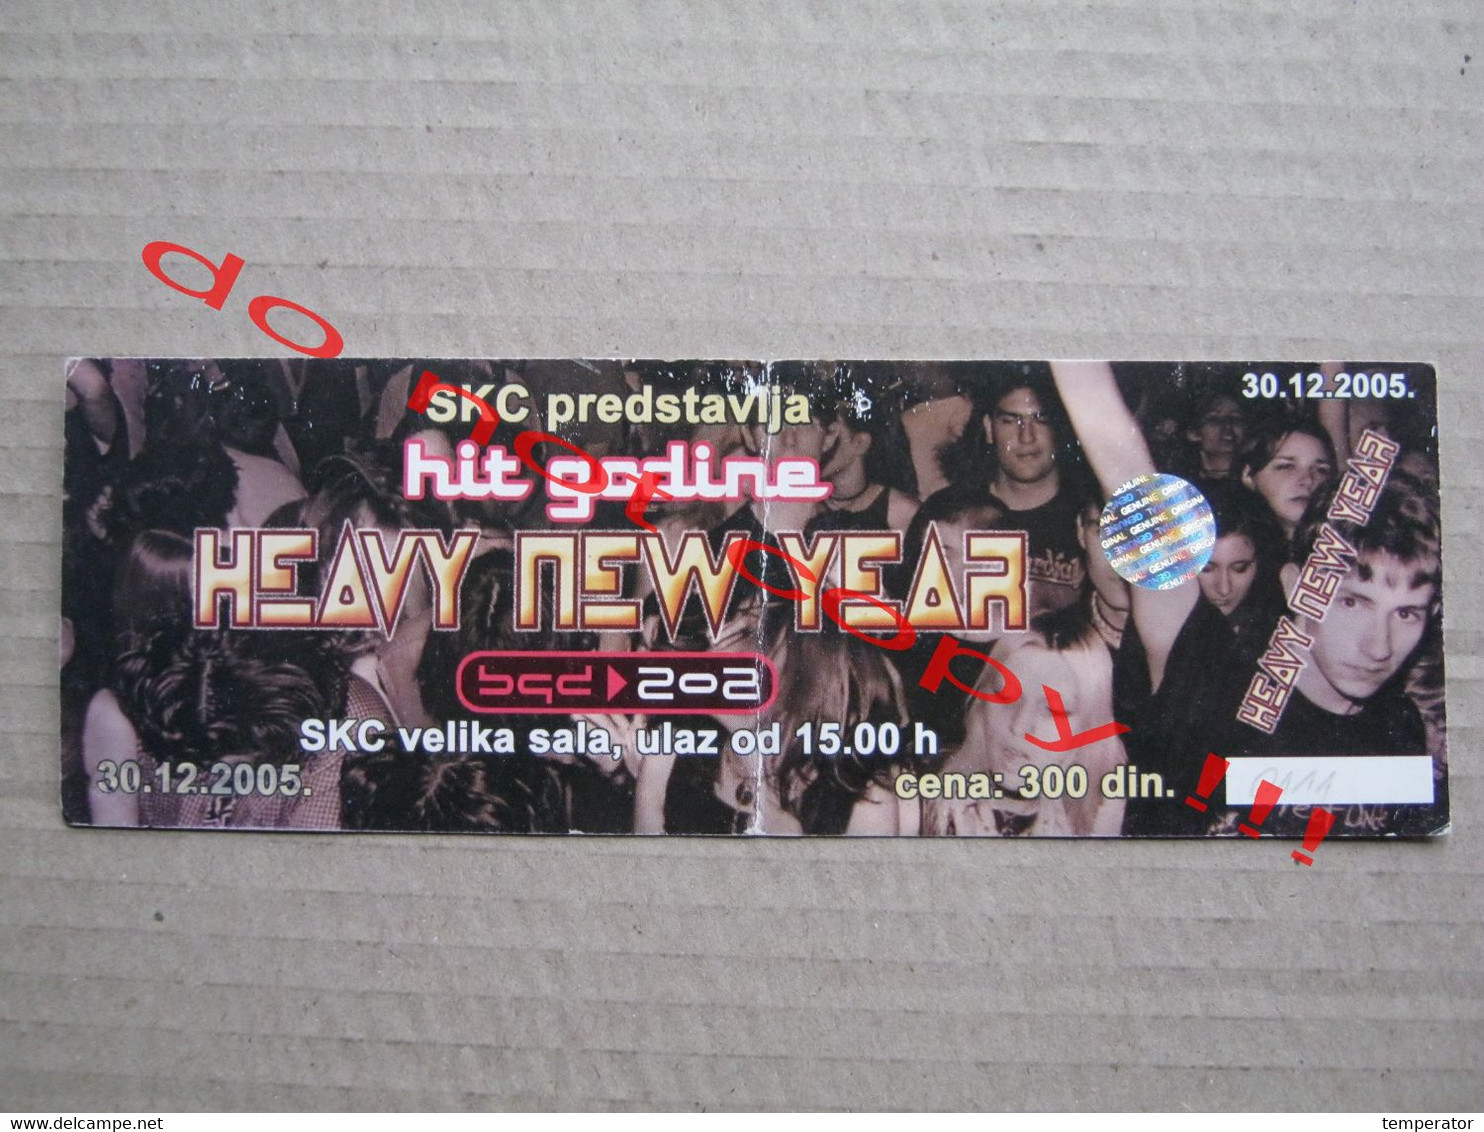 HEAVY NEW YEAR - 202 HIT GODINE ( 30.12.2005 ) / Concert Ticket - Belgrade SKC - Concert Tickets